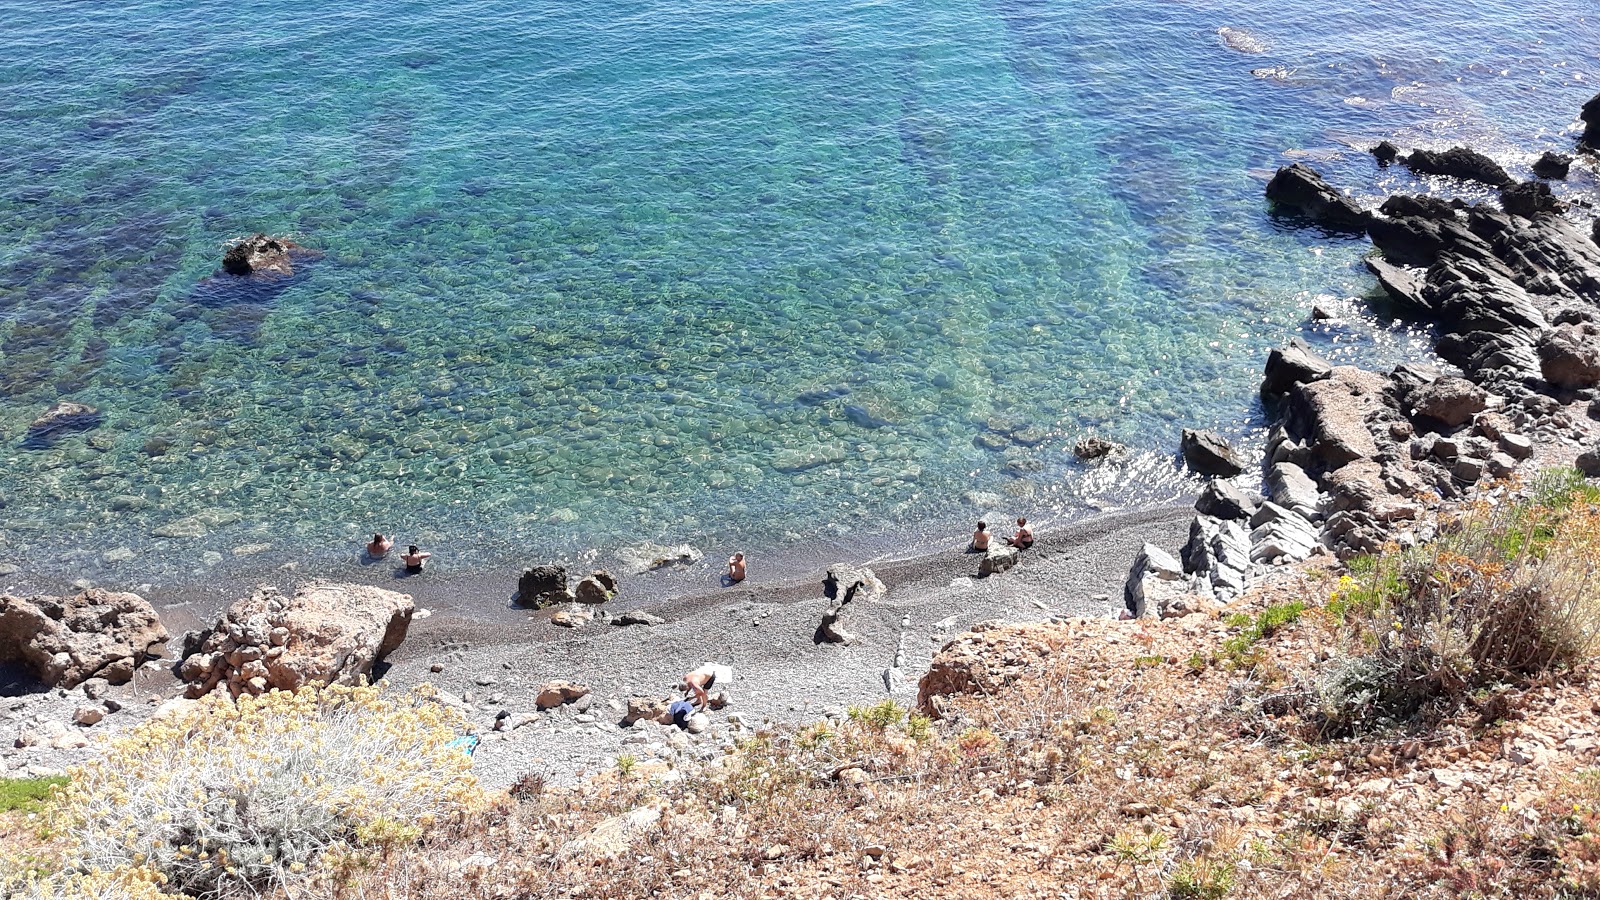 Fotografija Spiaggia de Rotolo z turkizna čista voda površino